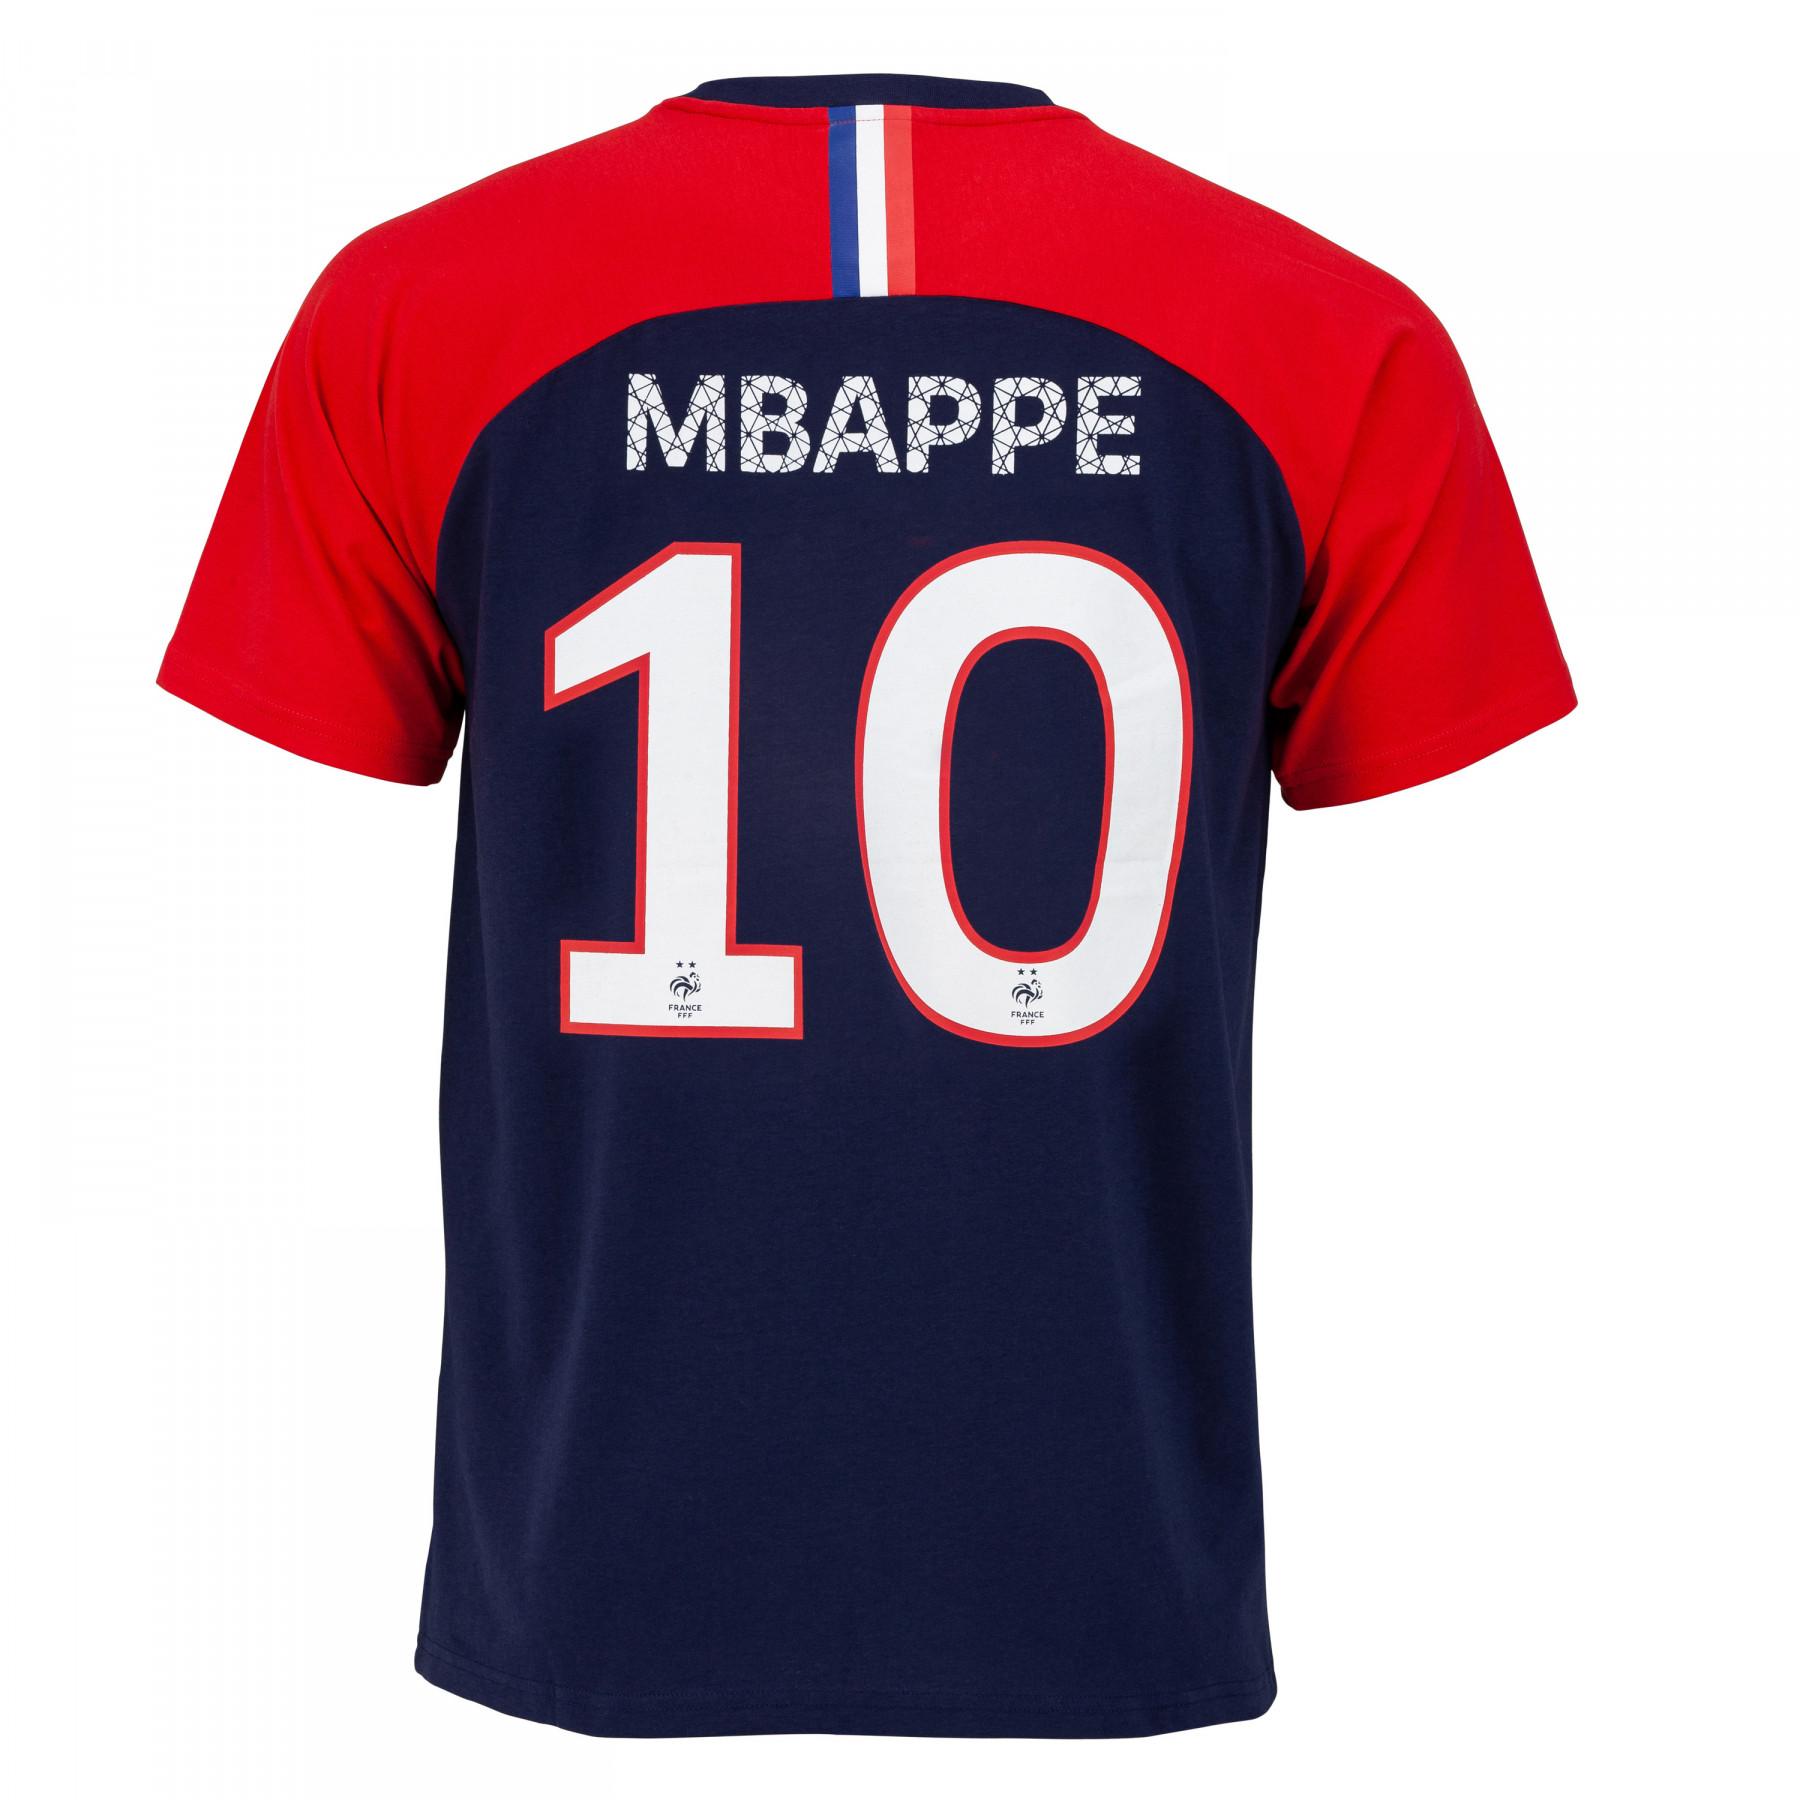 fff player mbappé n°10 t-shirt för barn